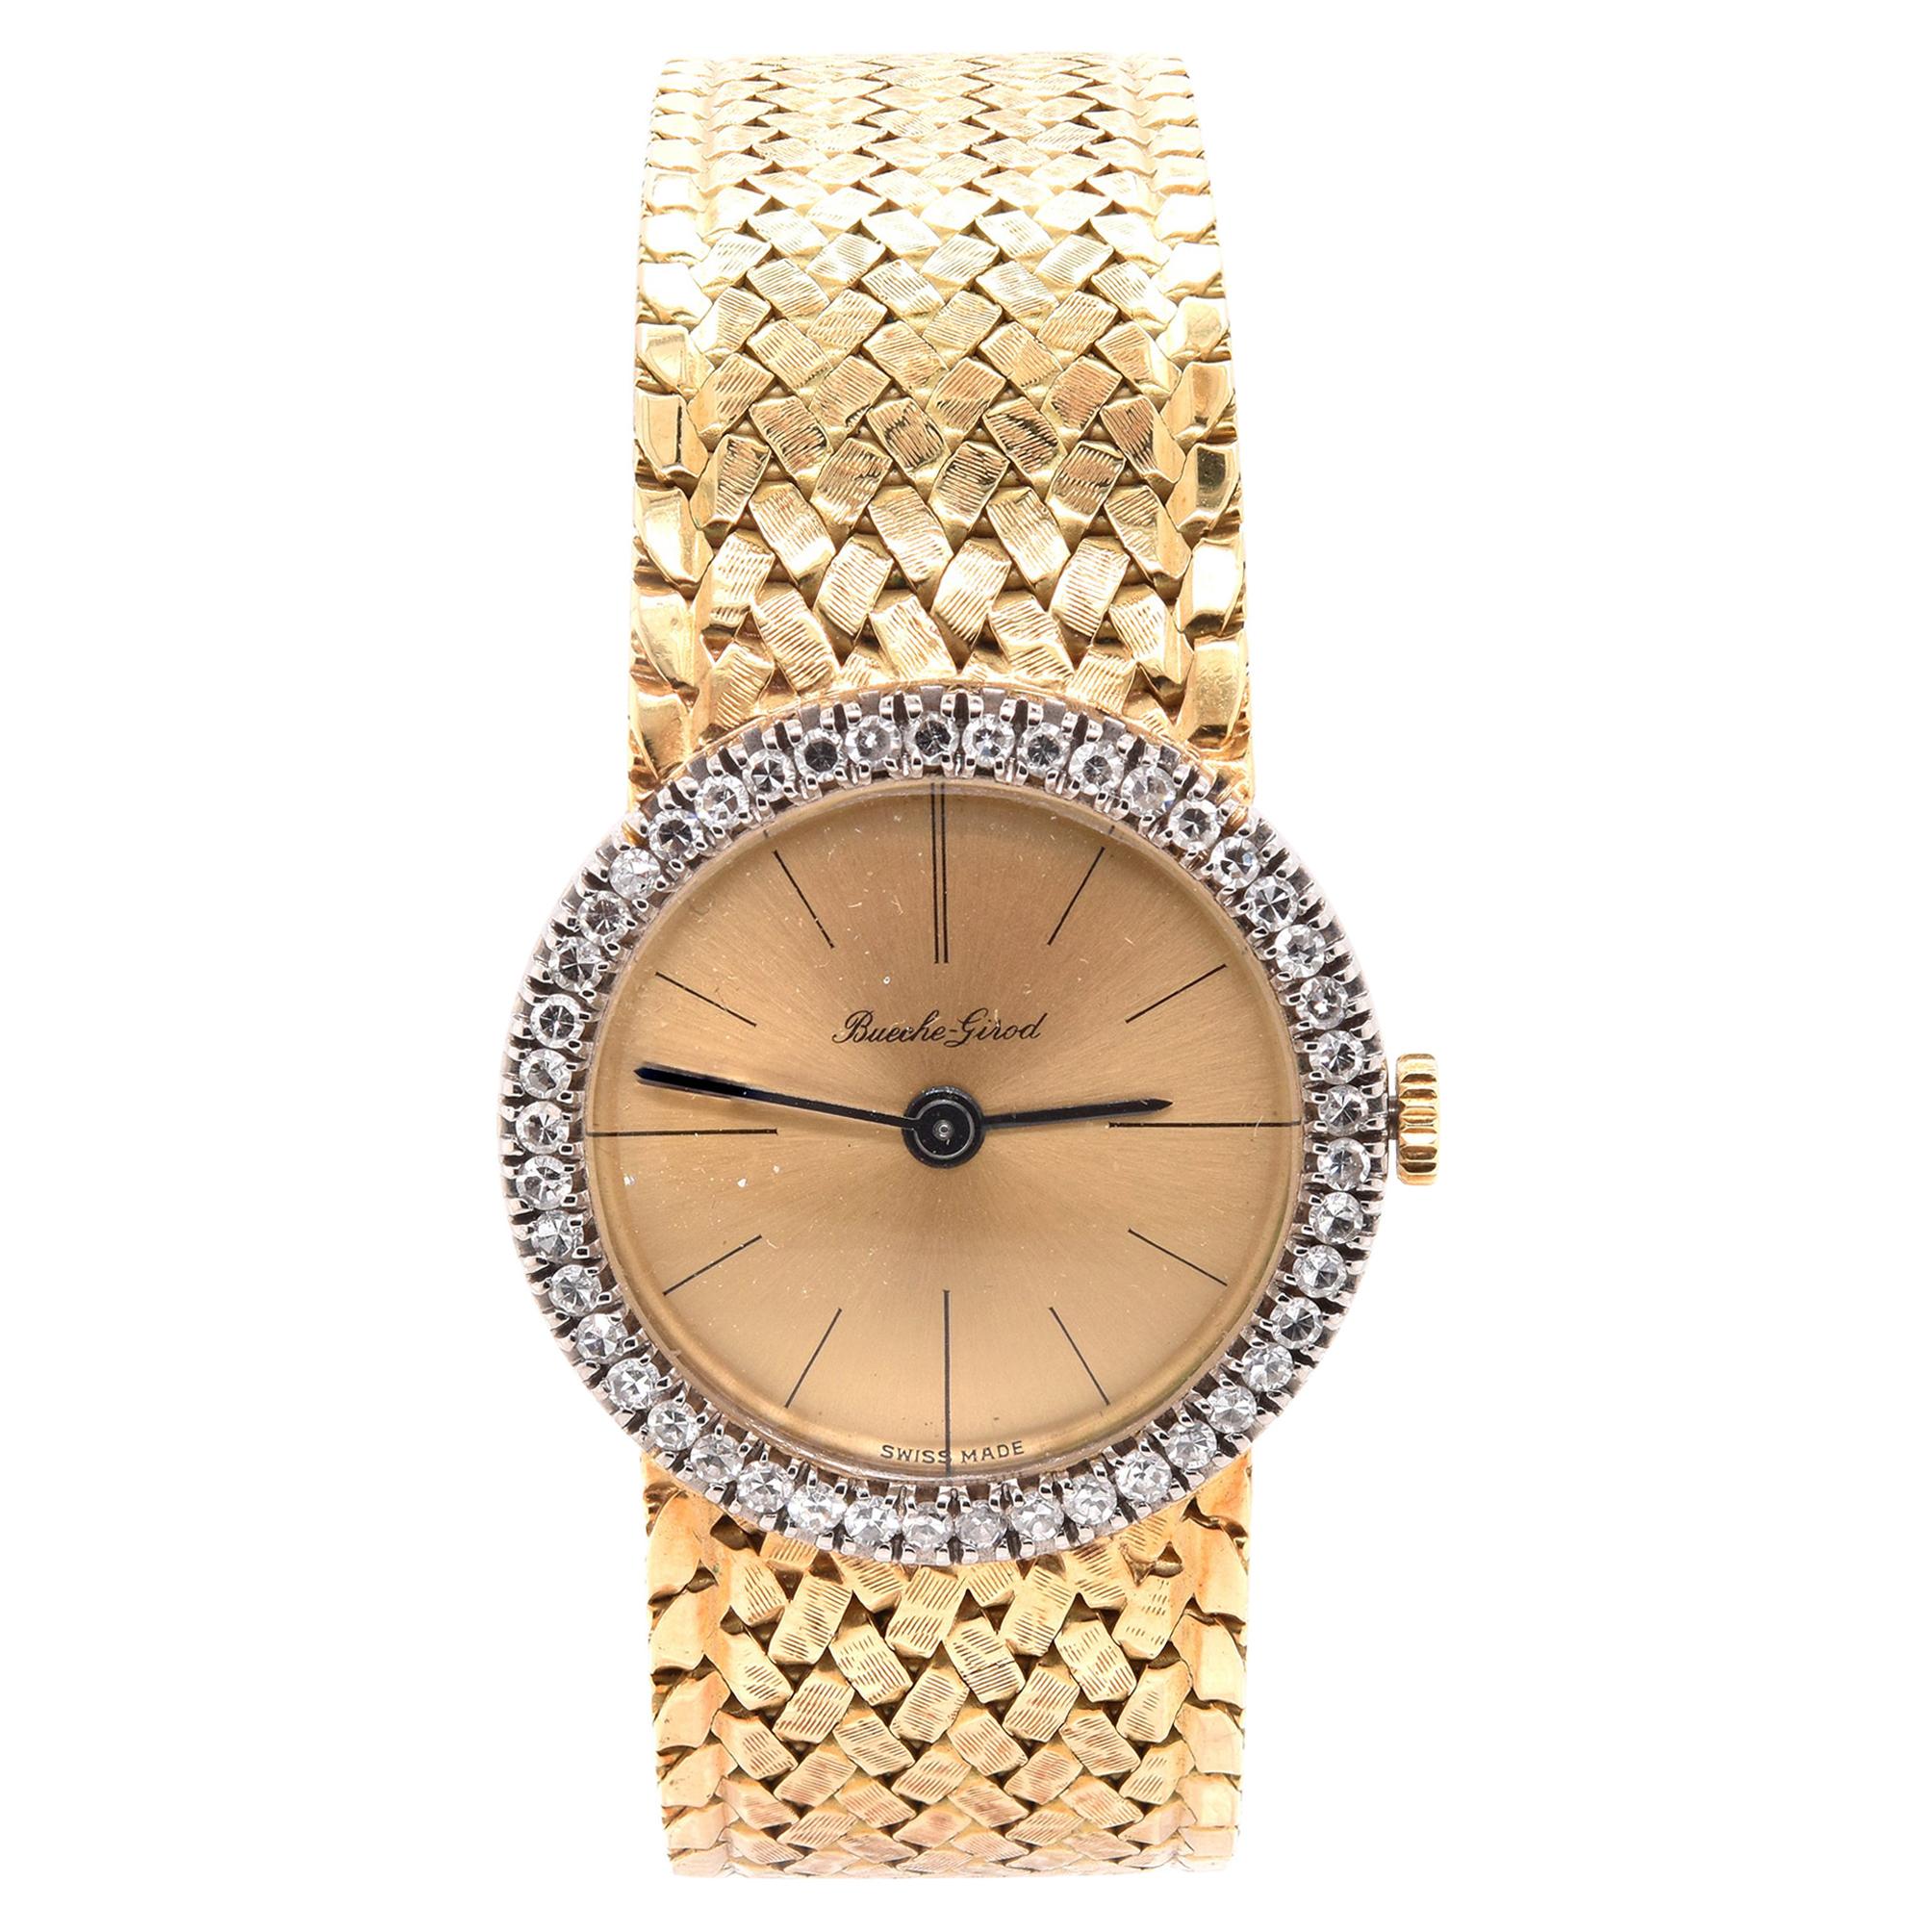 Bouche Girod 18 Karat Yellow Gold Vintage Ladies Diamond Watch